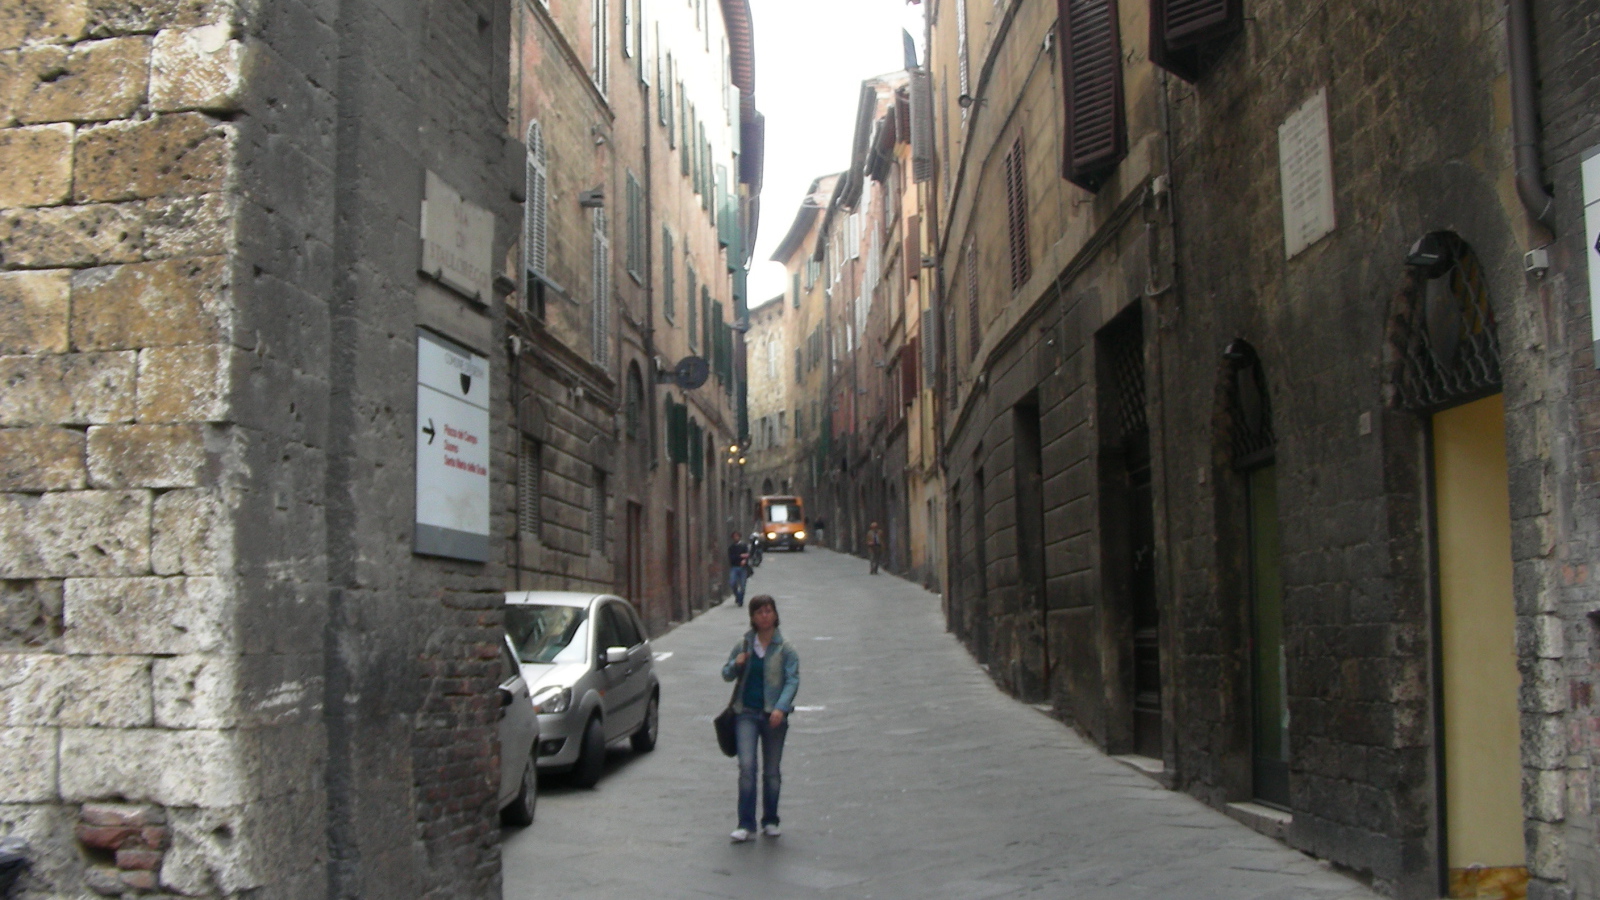 Walk through the narrow streets of Siena, Italy